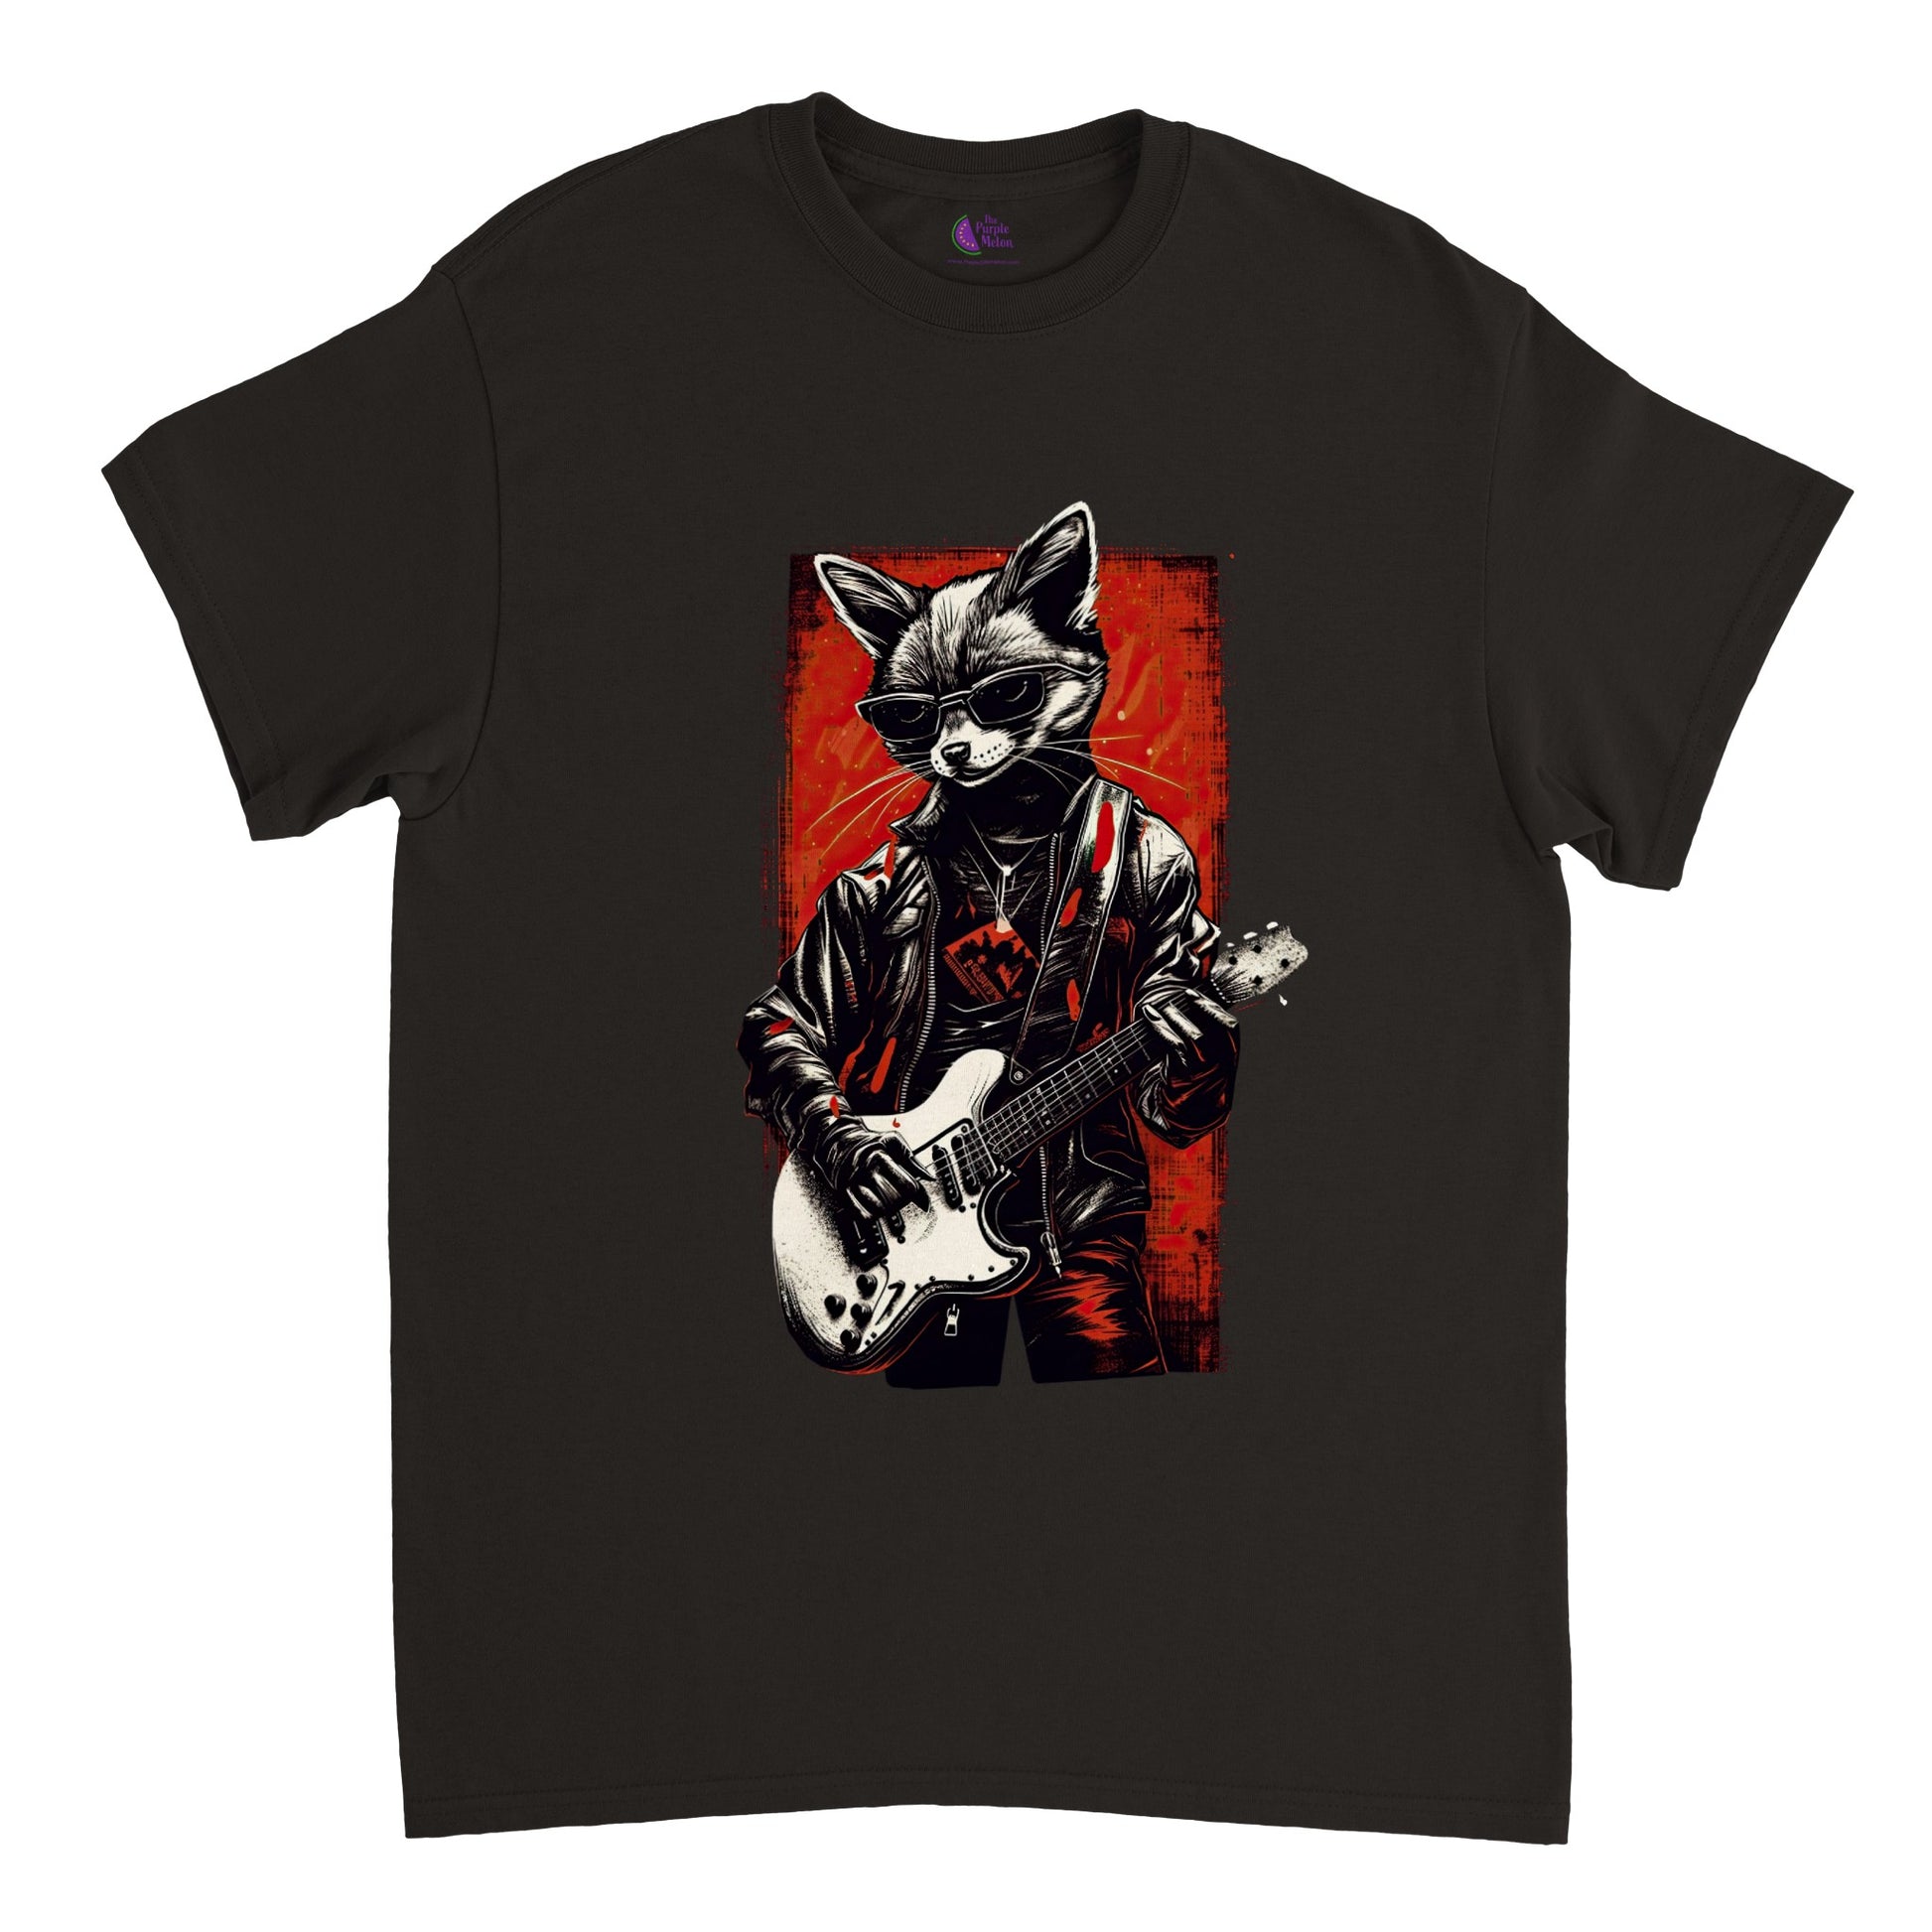 Black t-shirt with a cool fox playing bass guitar print